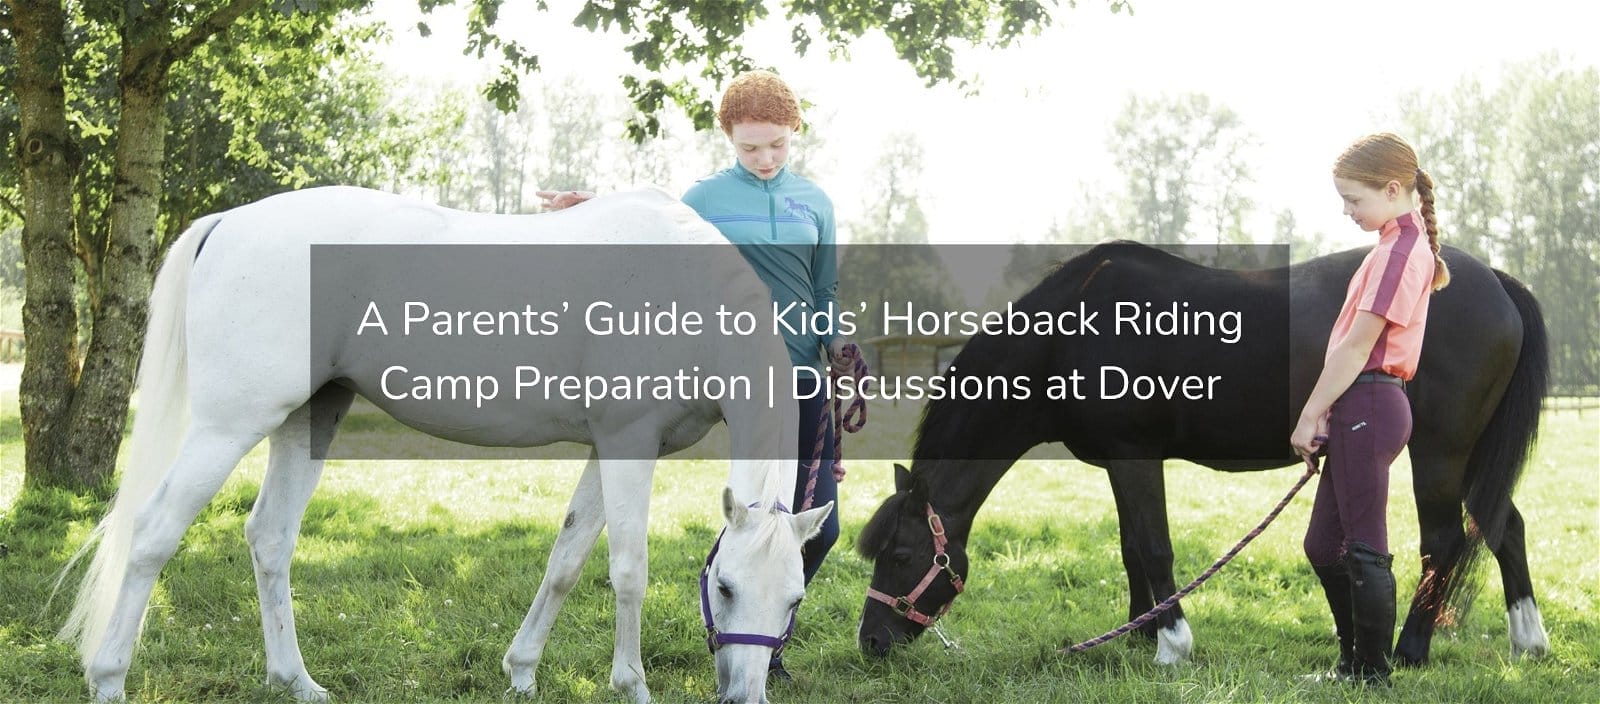 New Blog Post: "A Parents’ Guide to Kids’ Horseback Riding Camp Preparation"